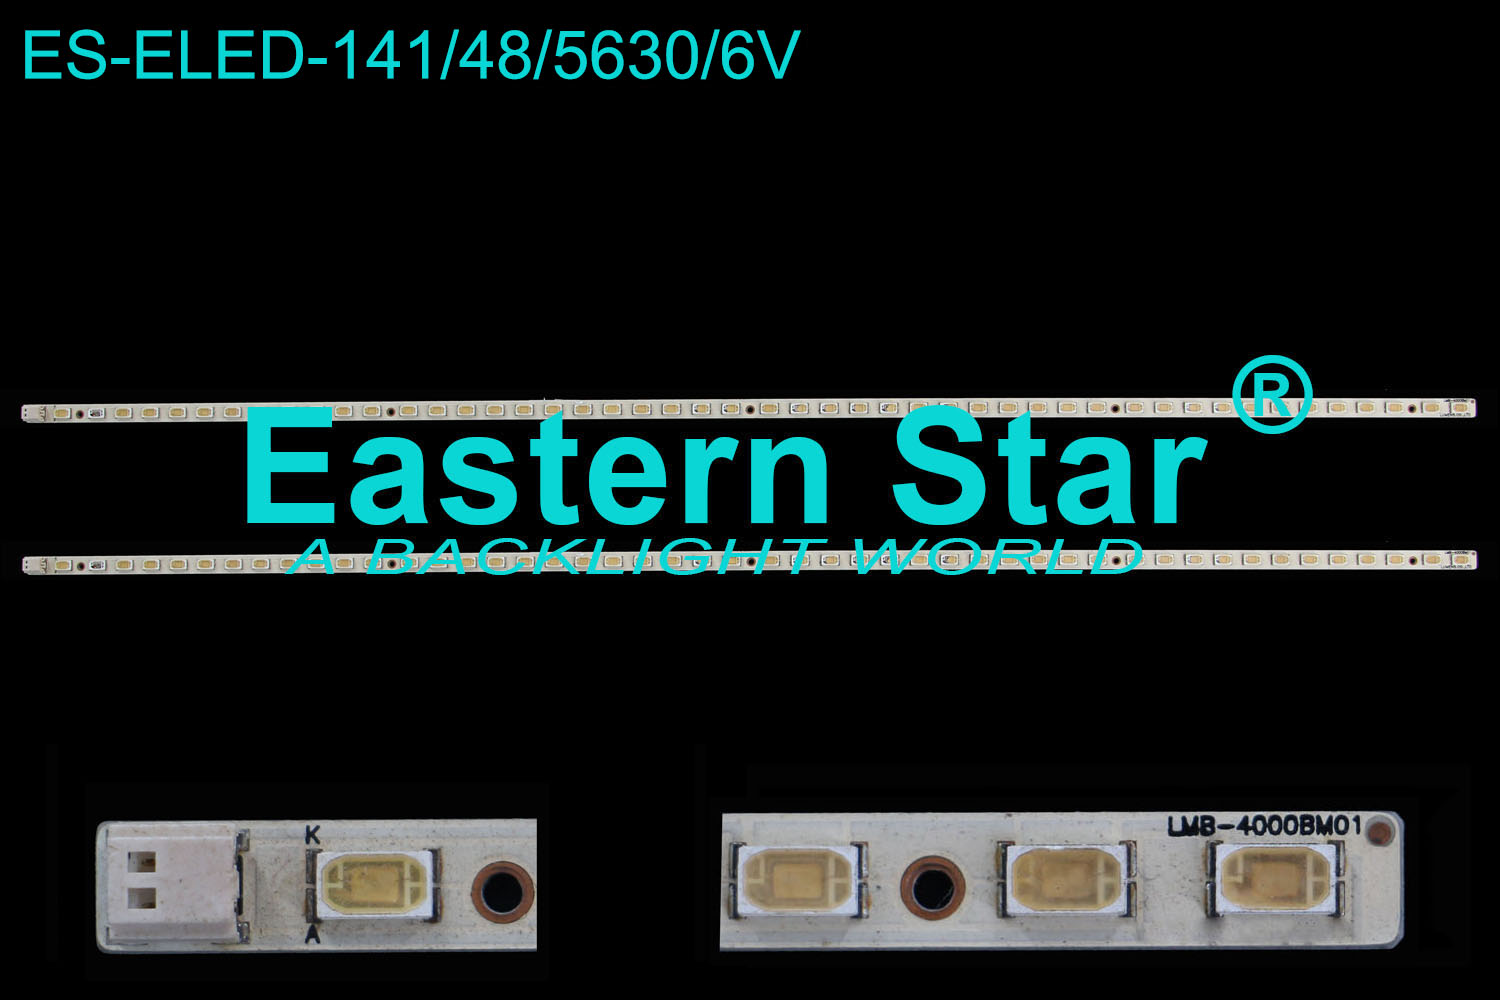 ES-ELED-141 ELED/EDGE TV backlight use for Samsung/Hisense/Haier 40'' 48LEDs LMB-4000BM01 LED STRIPS(6)